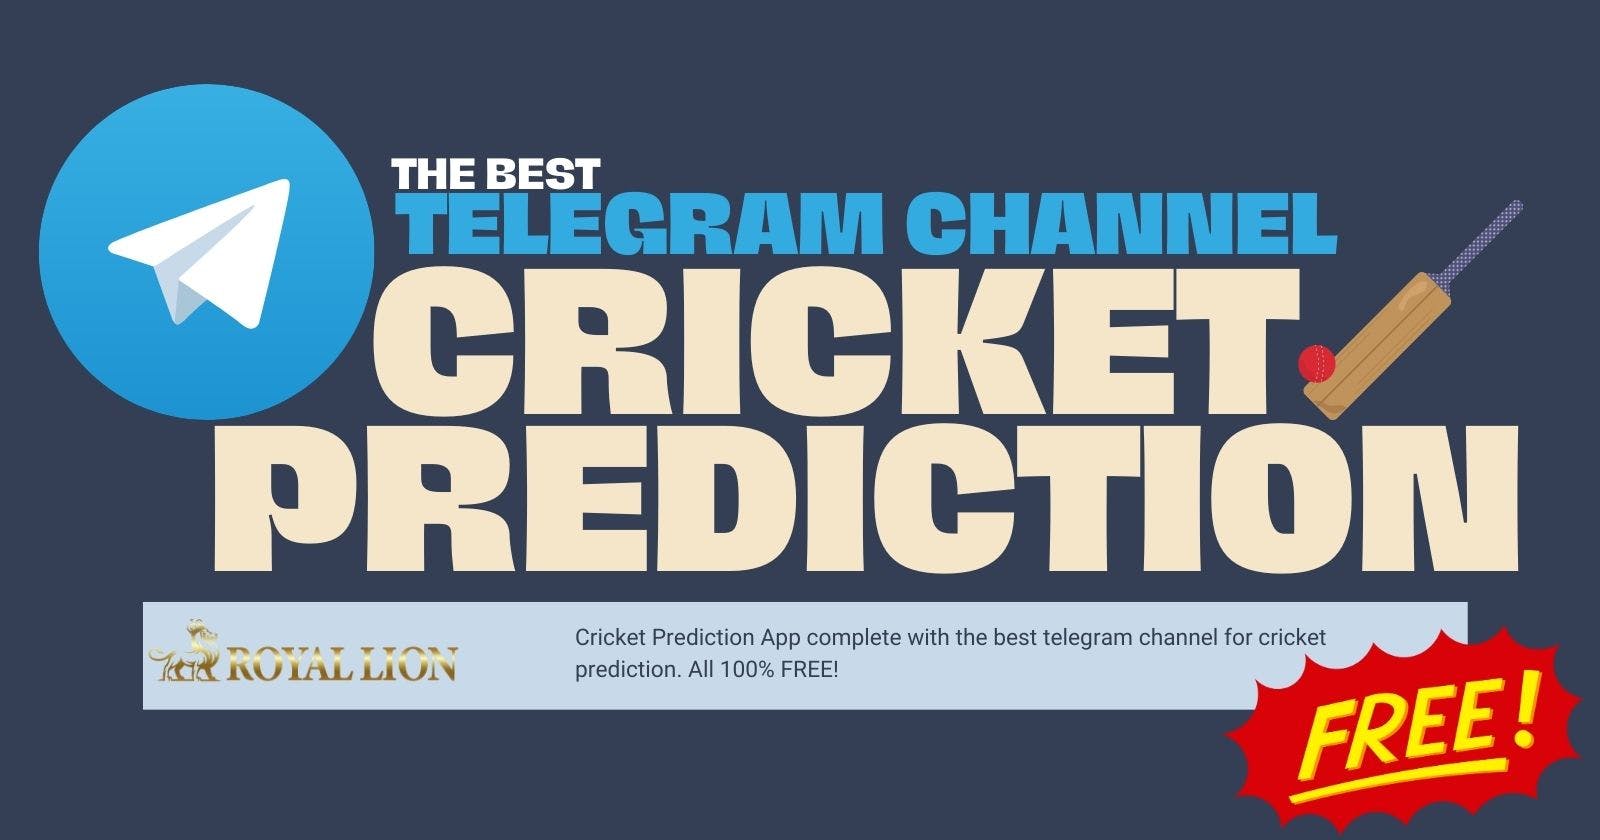 Cricket Prediction App with Telegram Channel